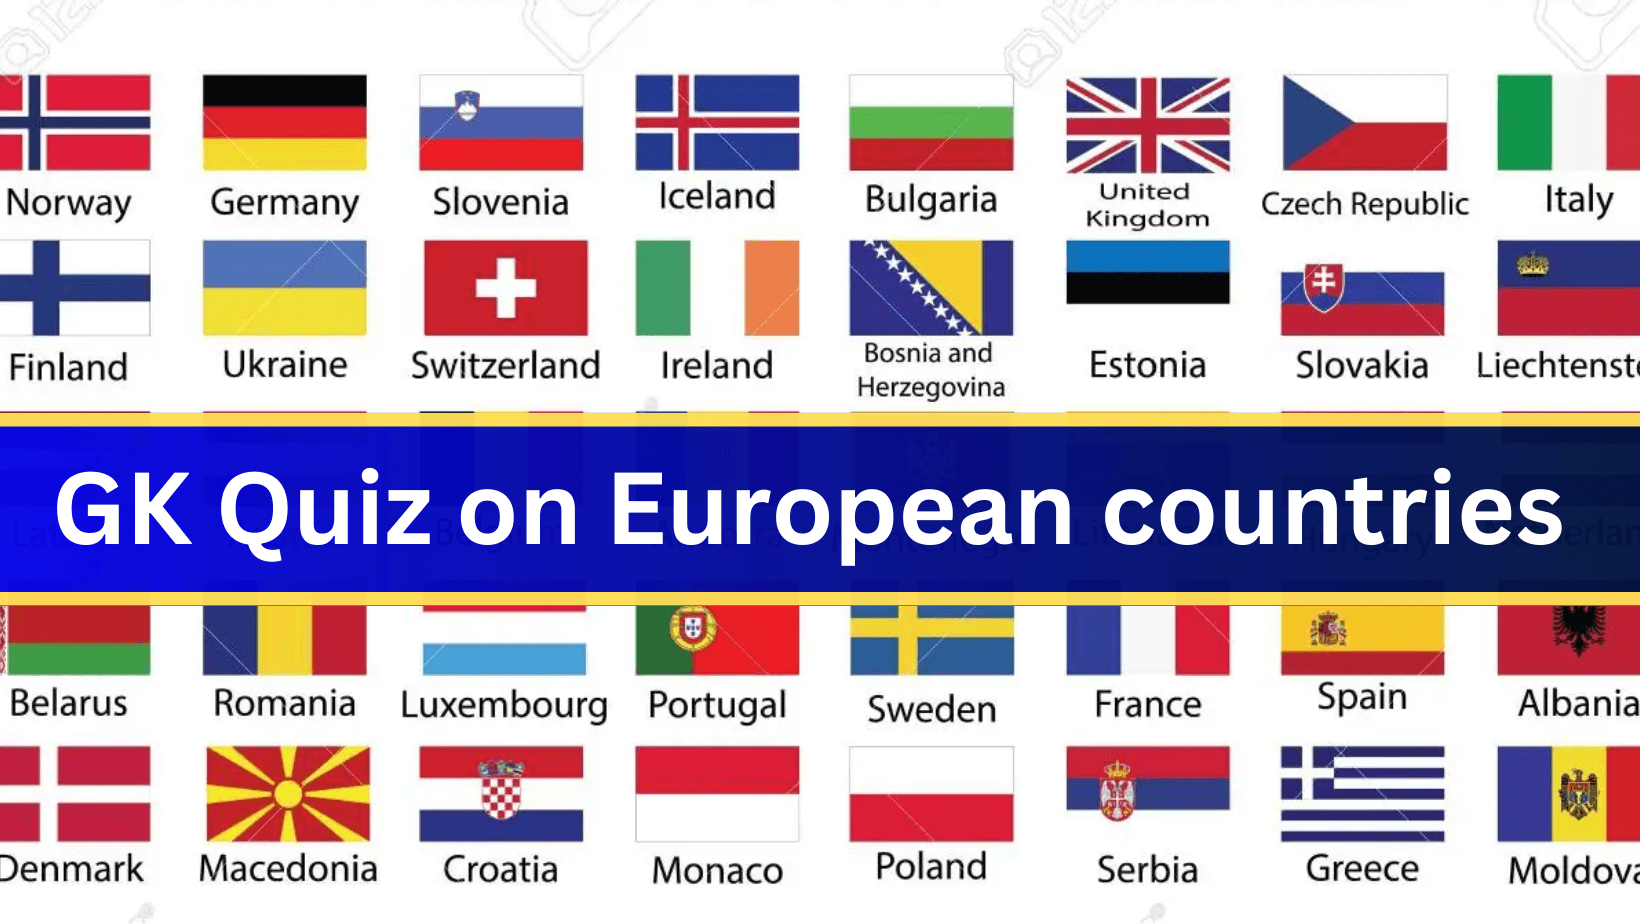 GK Quiz on European countries